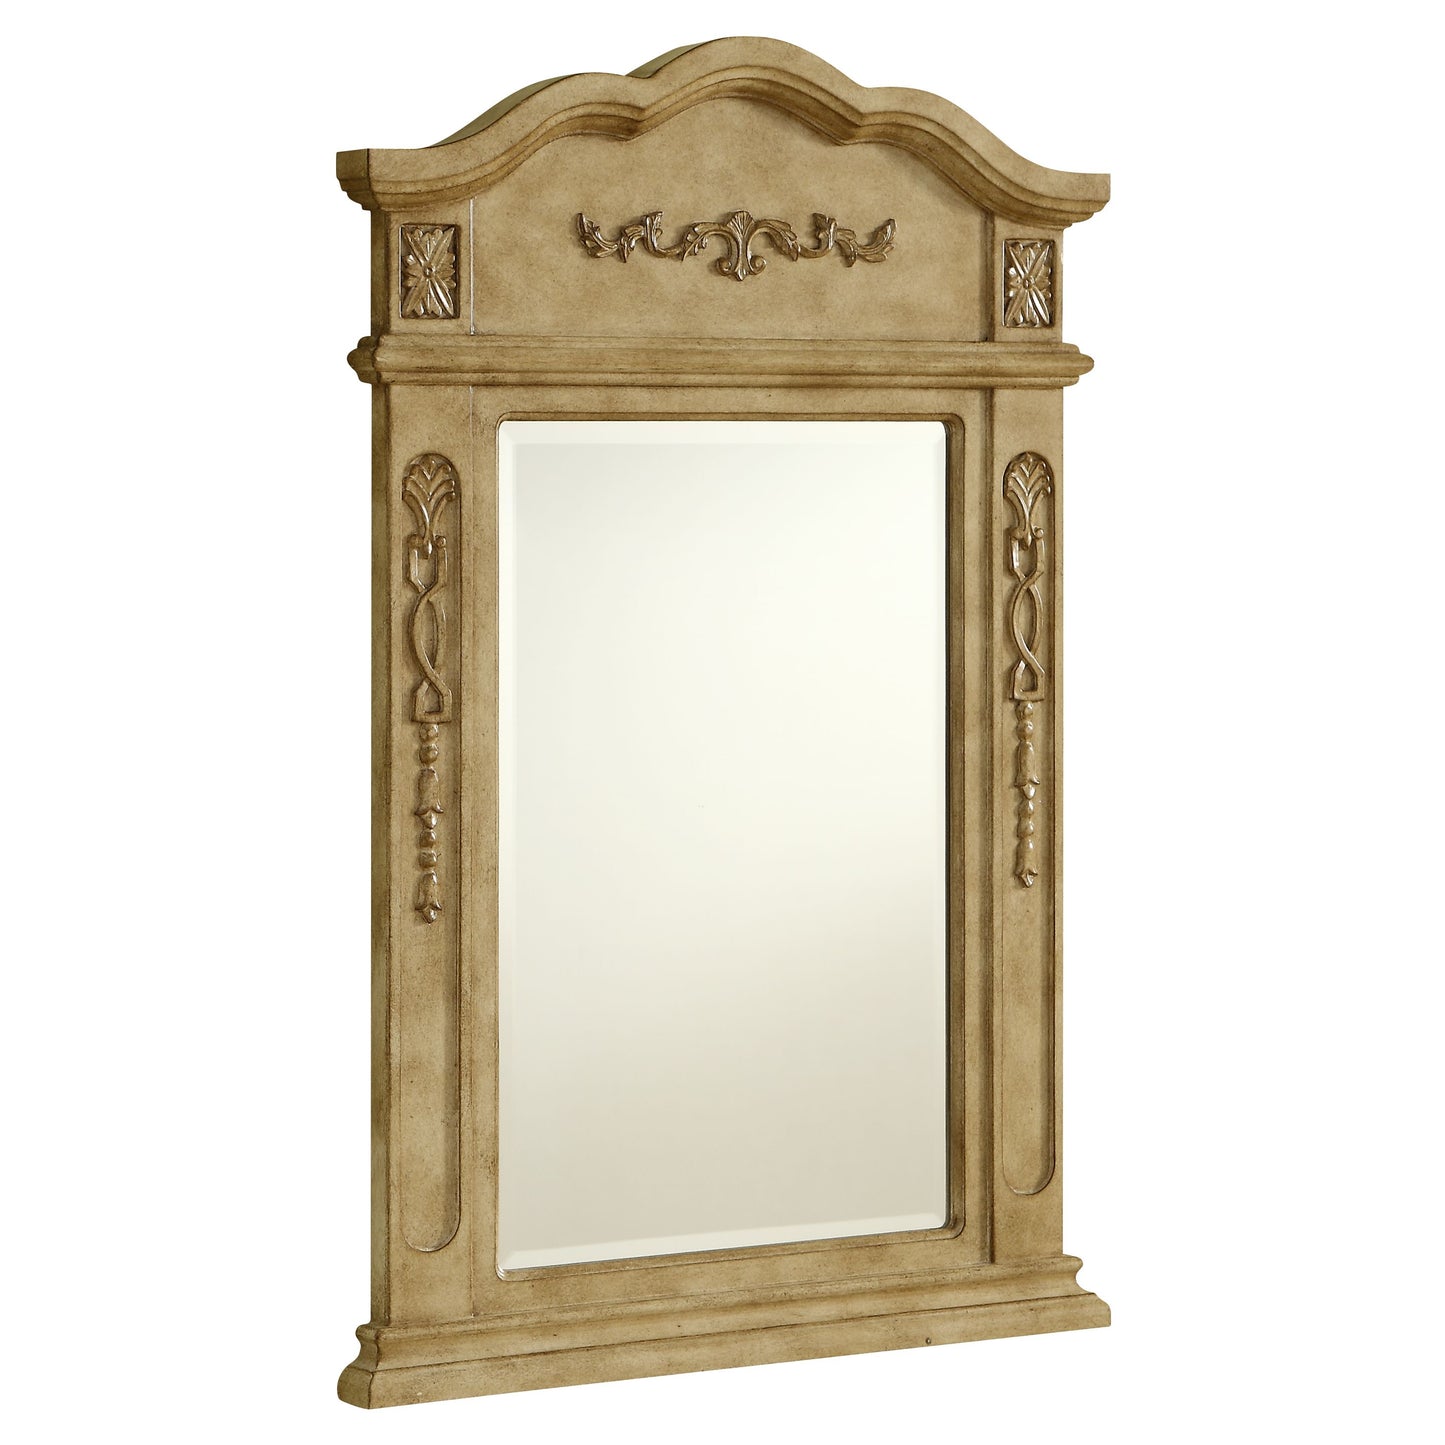 VM-1001 Danville 24" x 36" Wood Framed Decorative Mirror in Antique Beige